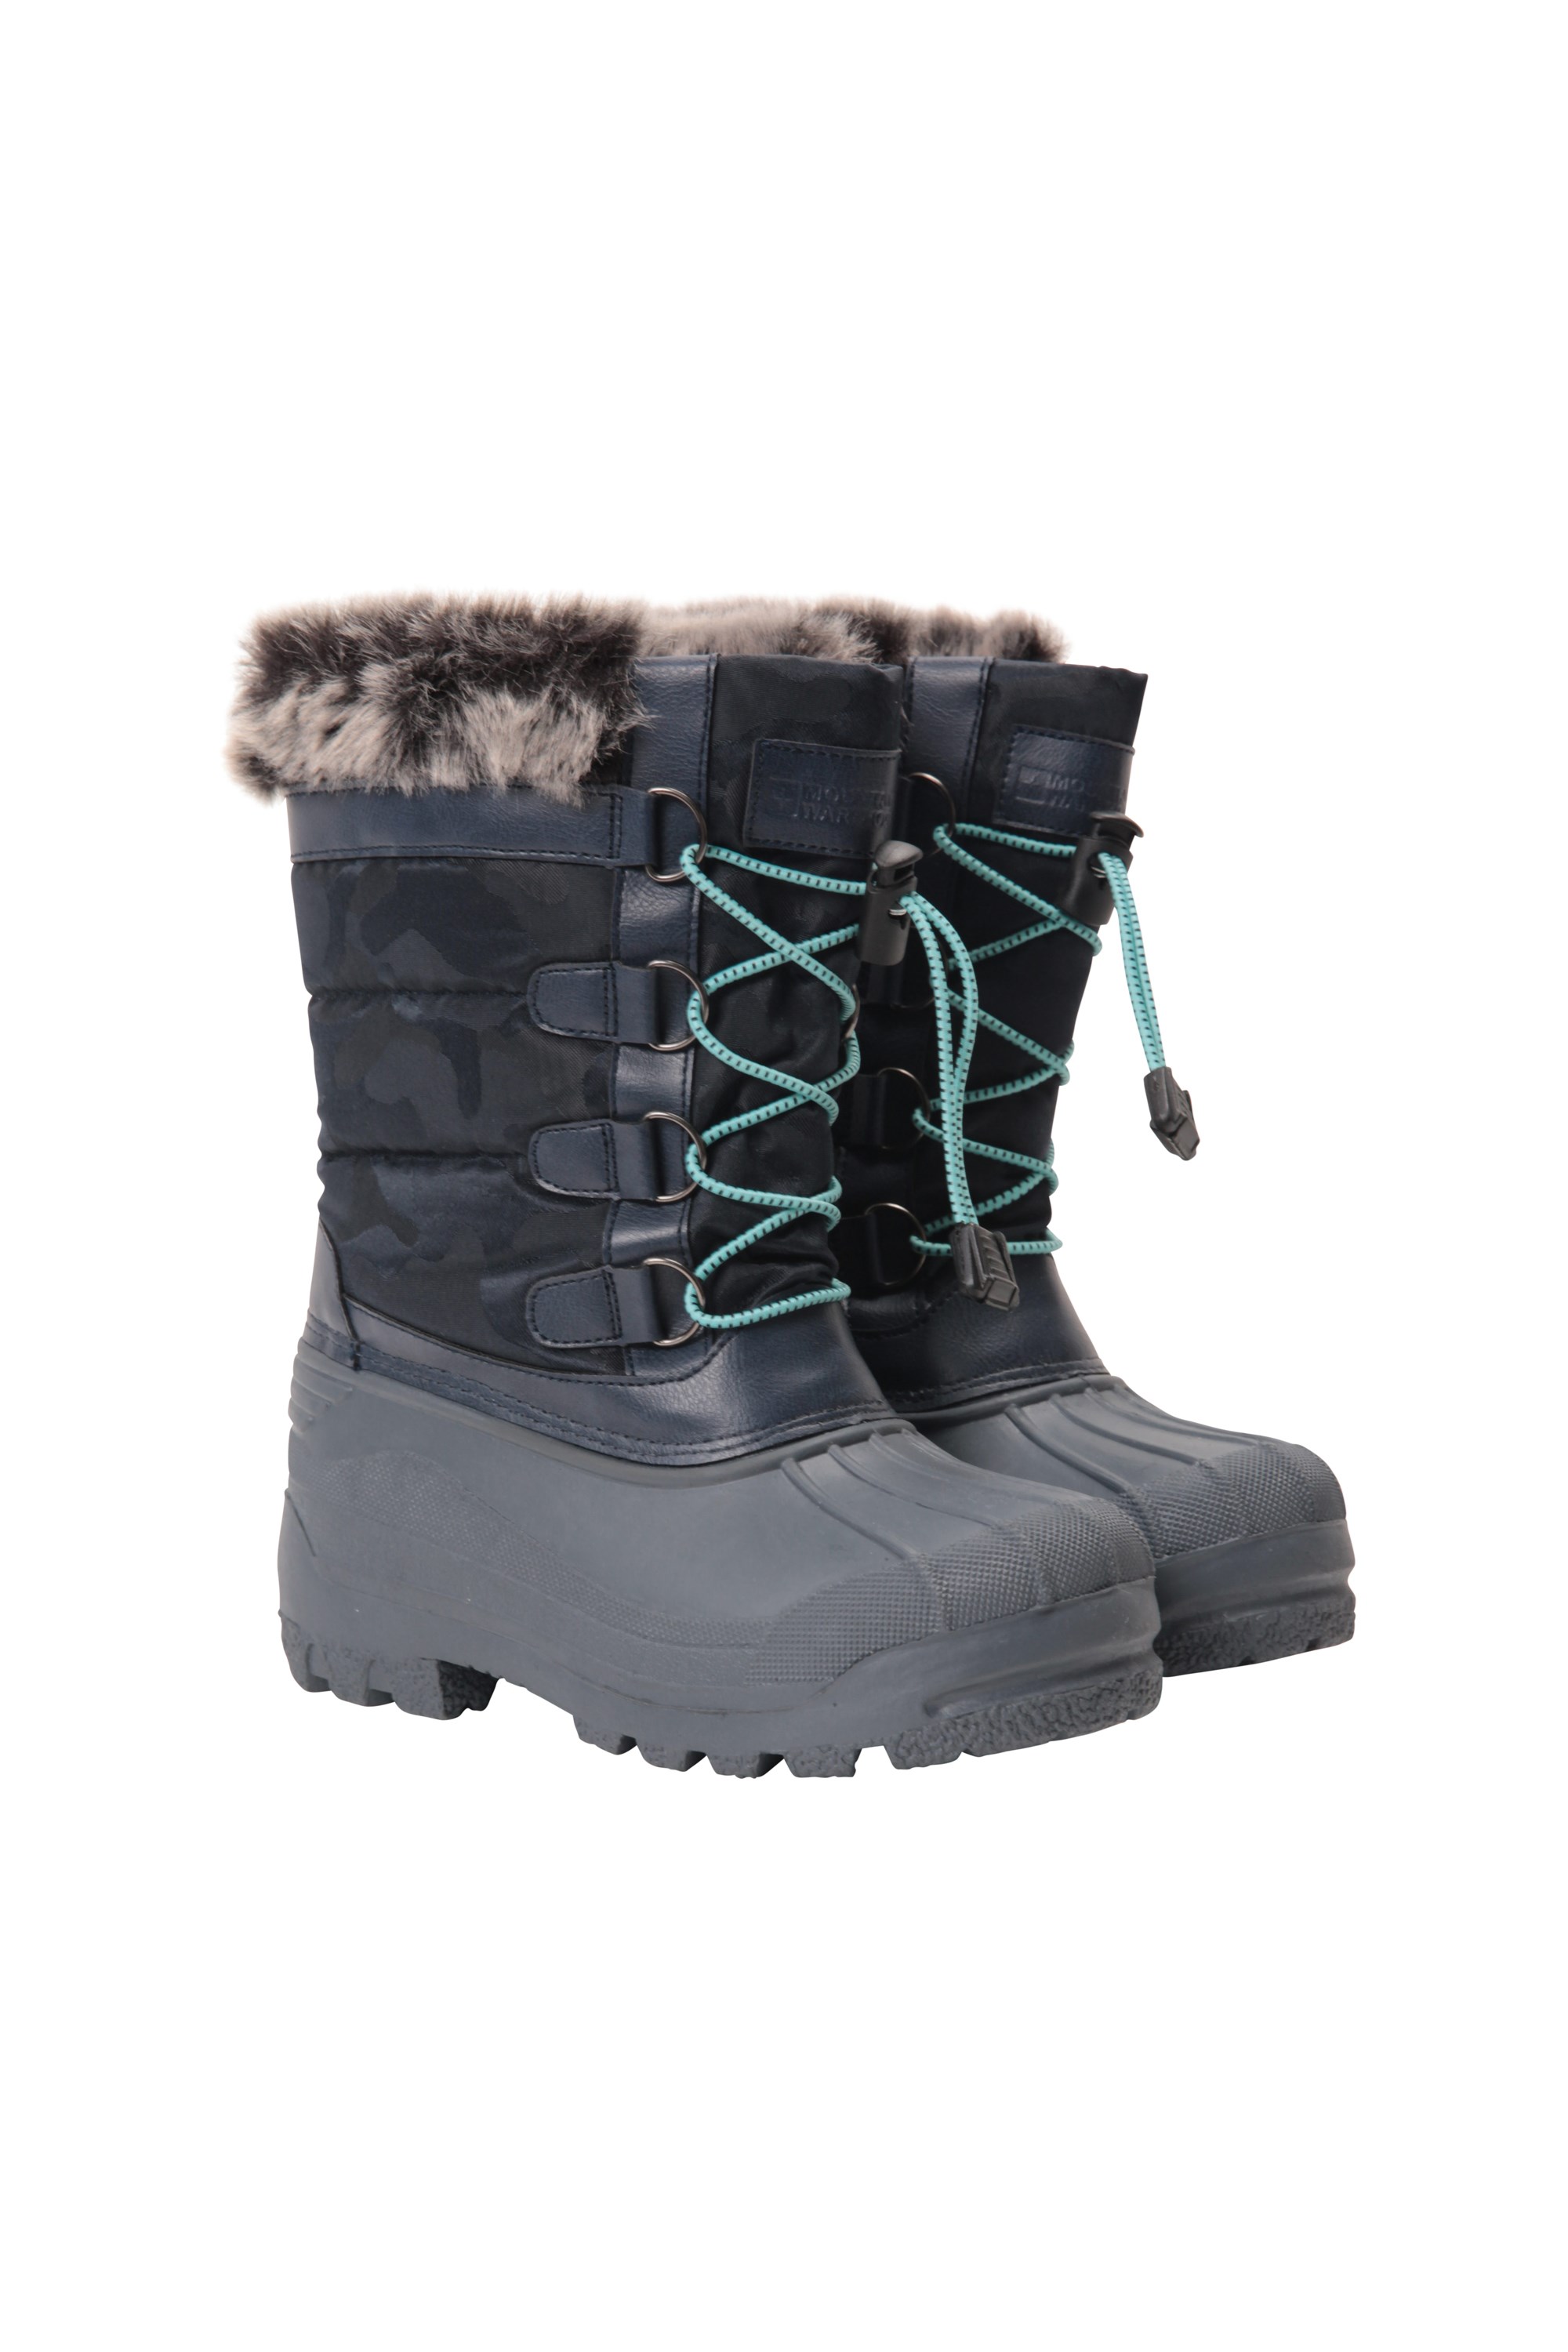 Mountain Warehouse Alaska Thermal Kids Snow Boots Navy